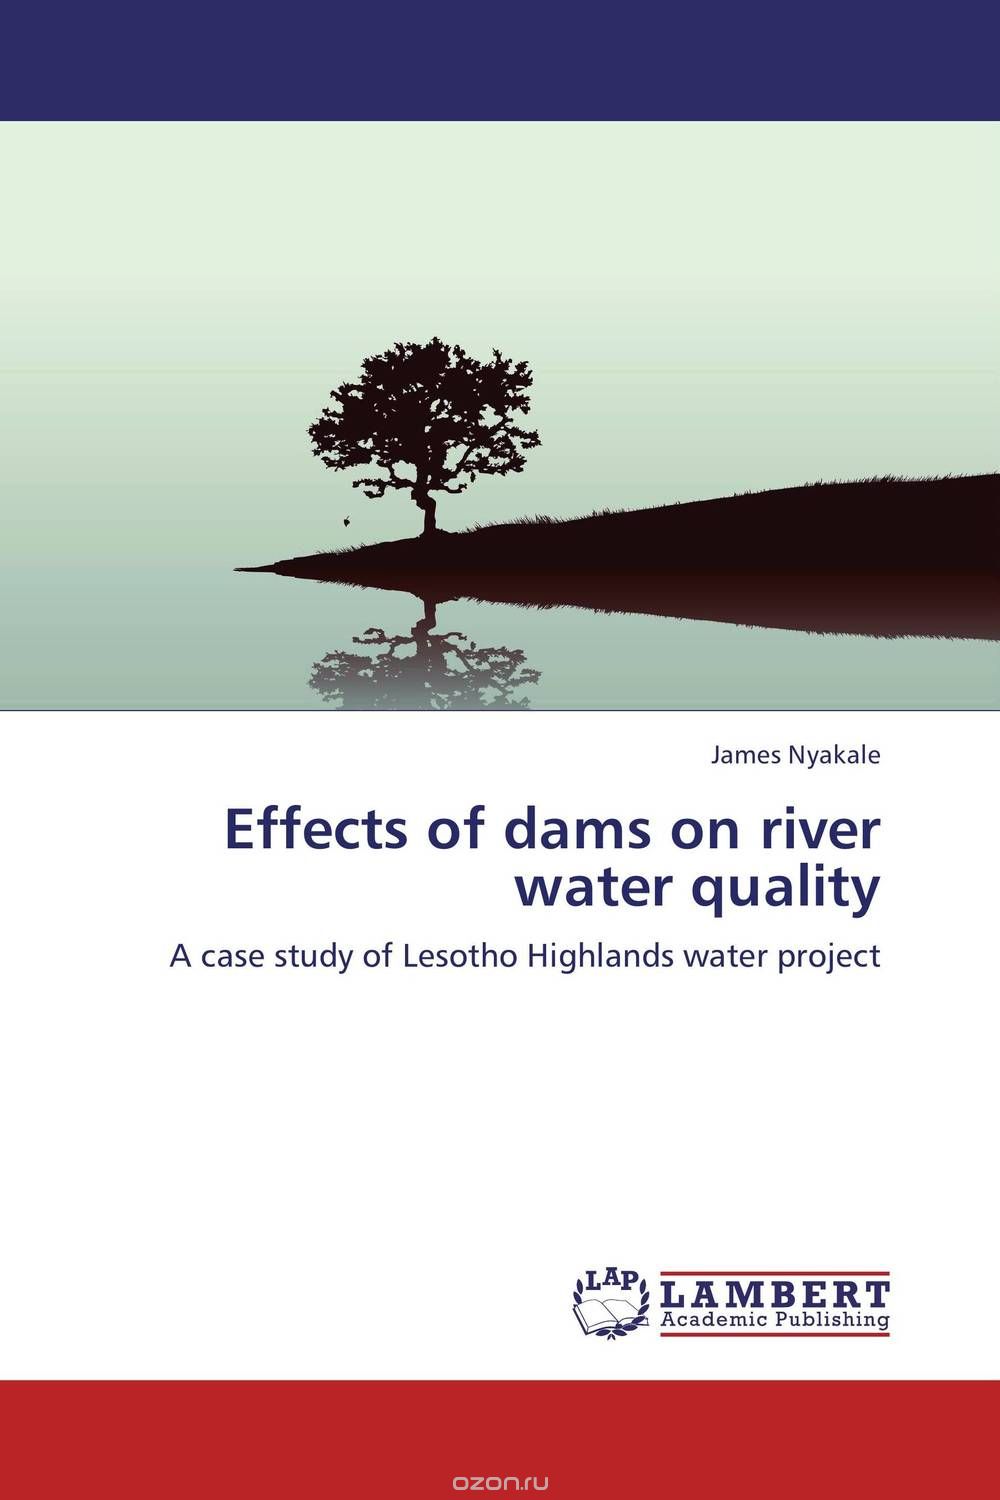 Скачать книгу "Effects of dams on river water quality"